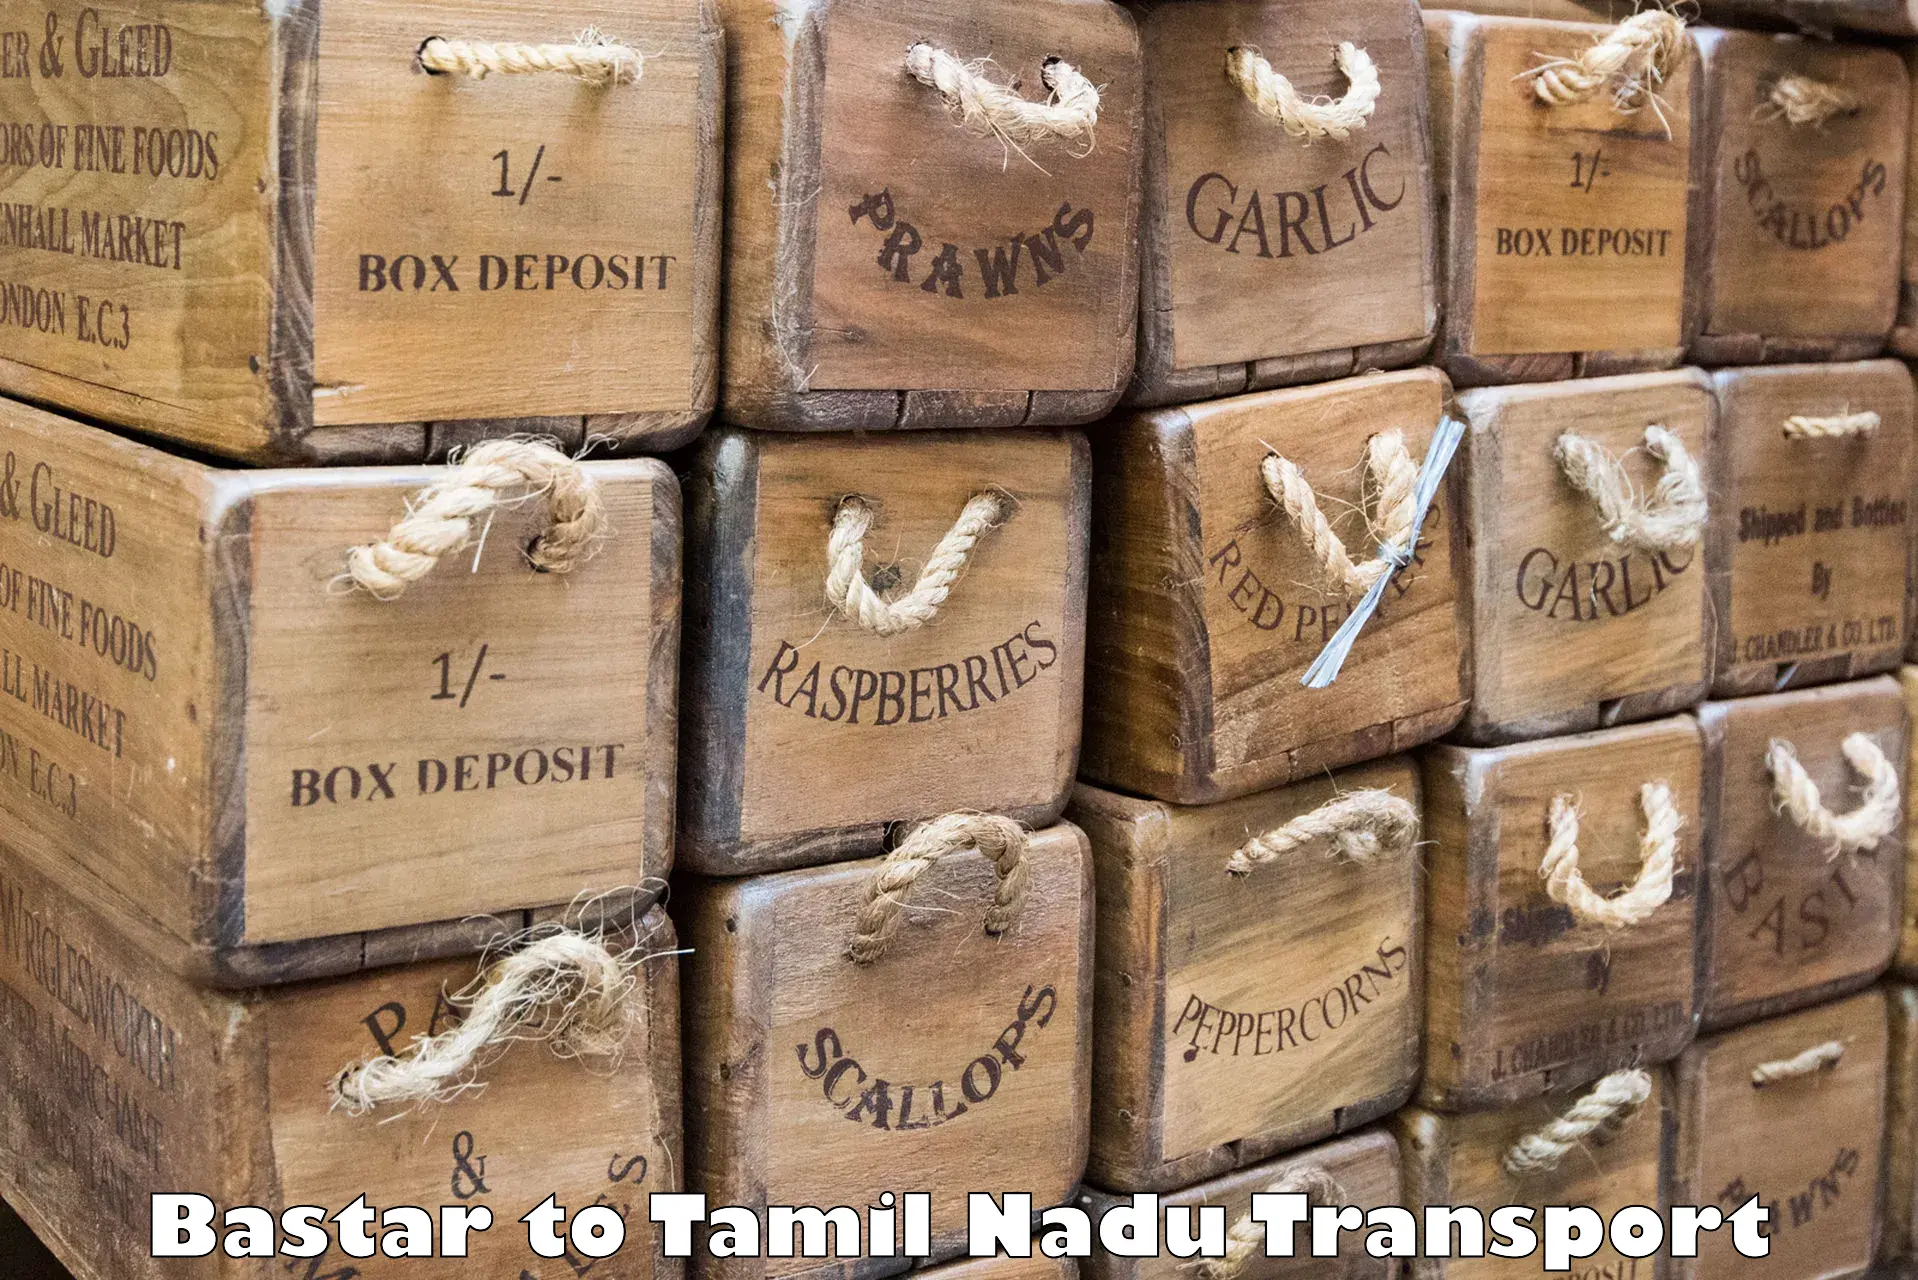 Online transport service Bastar to Thanjavur